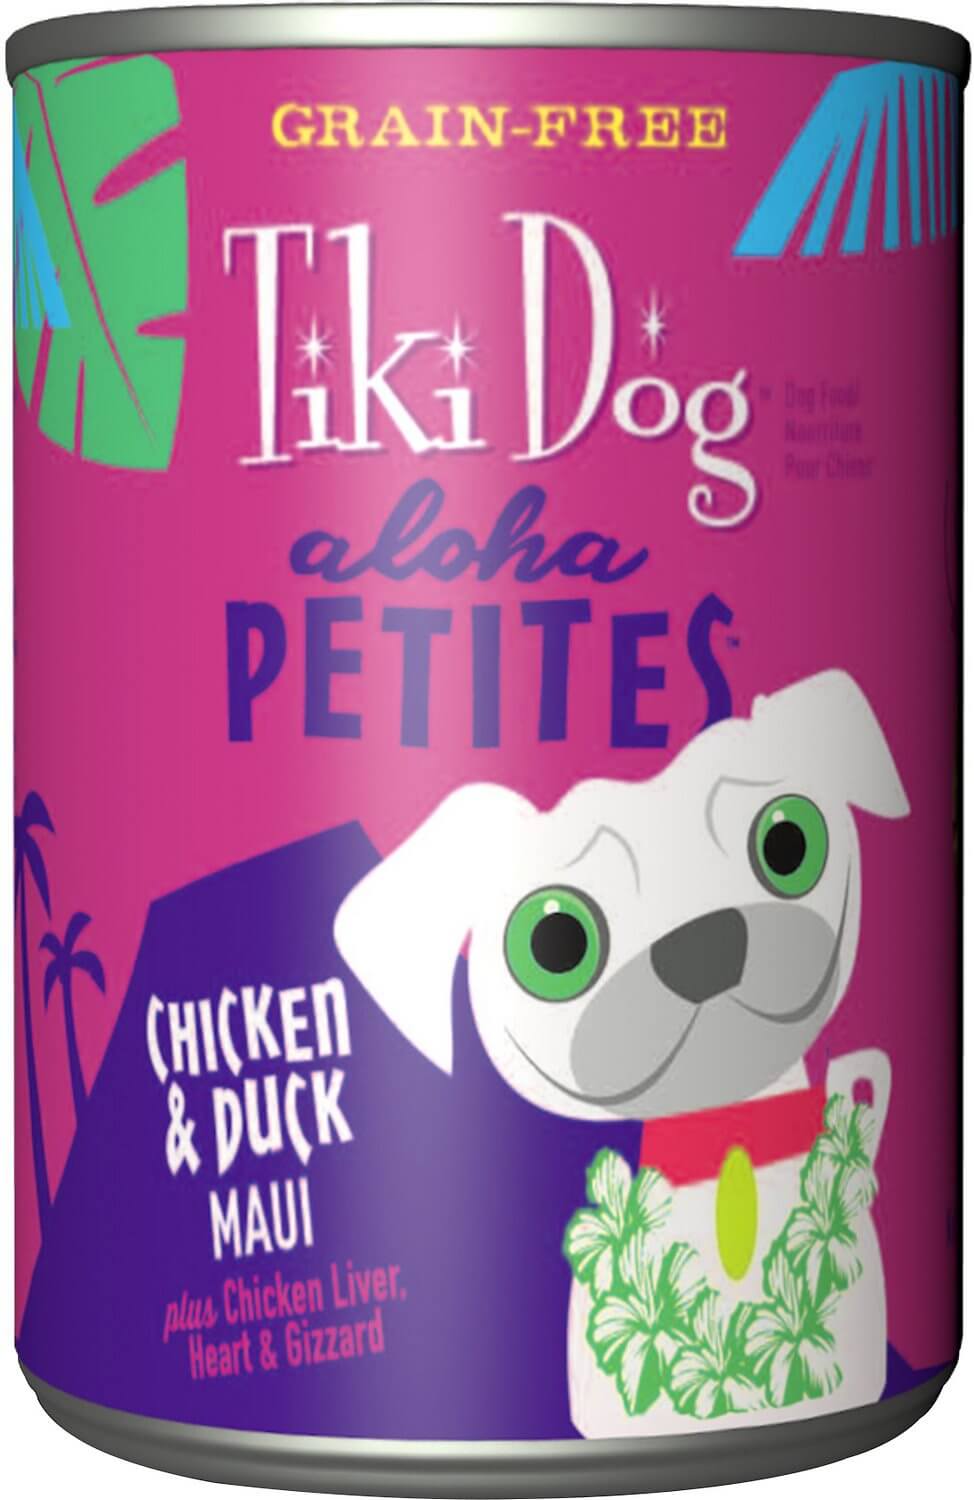 Tiki Dog Aloha Petites Dog Food Review (Canned)